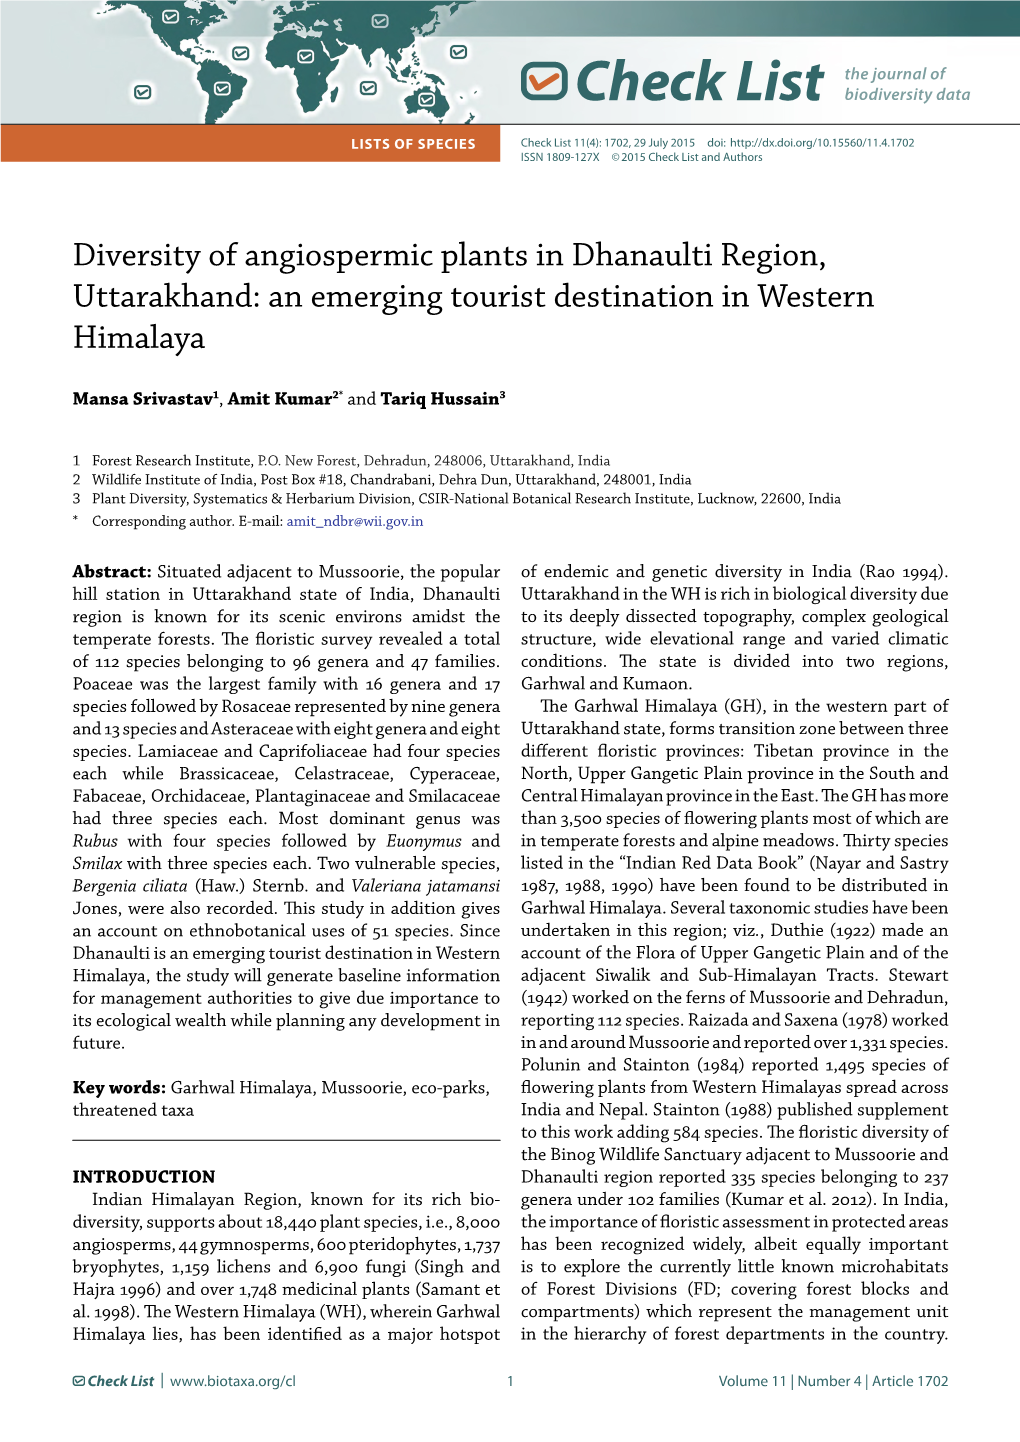 Diversity of Angiospermic Plants in Dhanaulti Region, Uttarakhand: an Emerging Tourist Destination in Western Himalaya